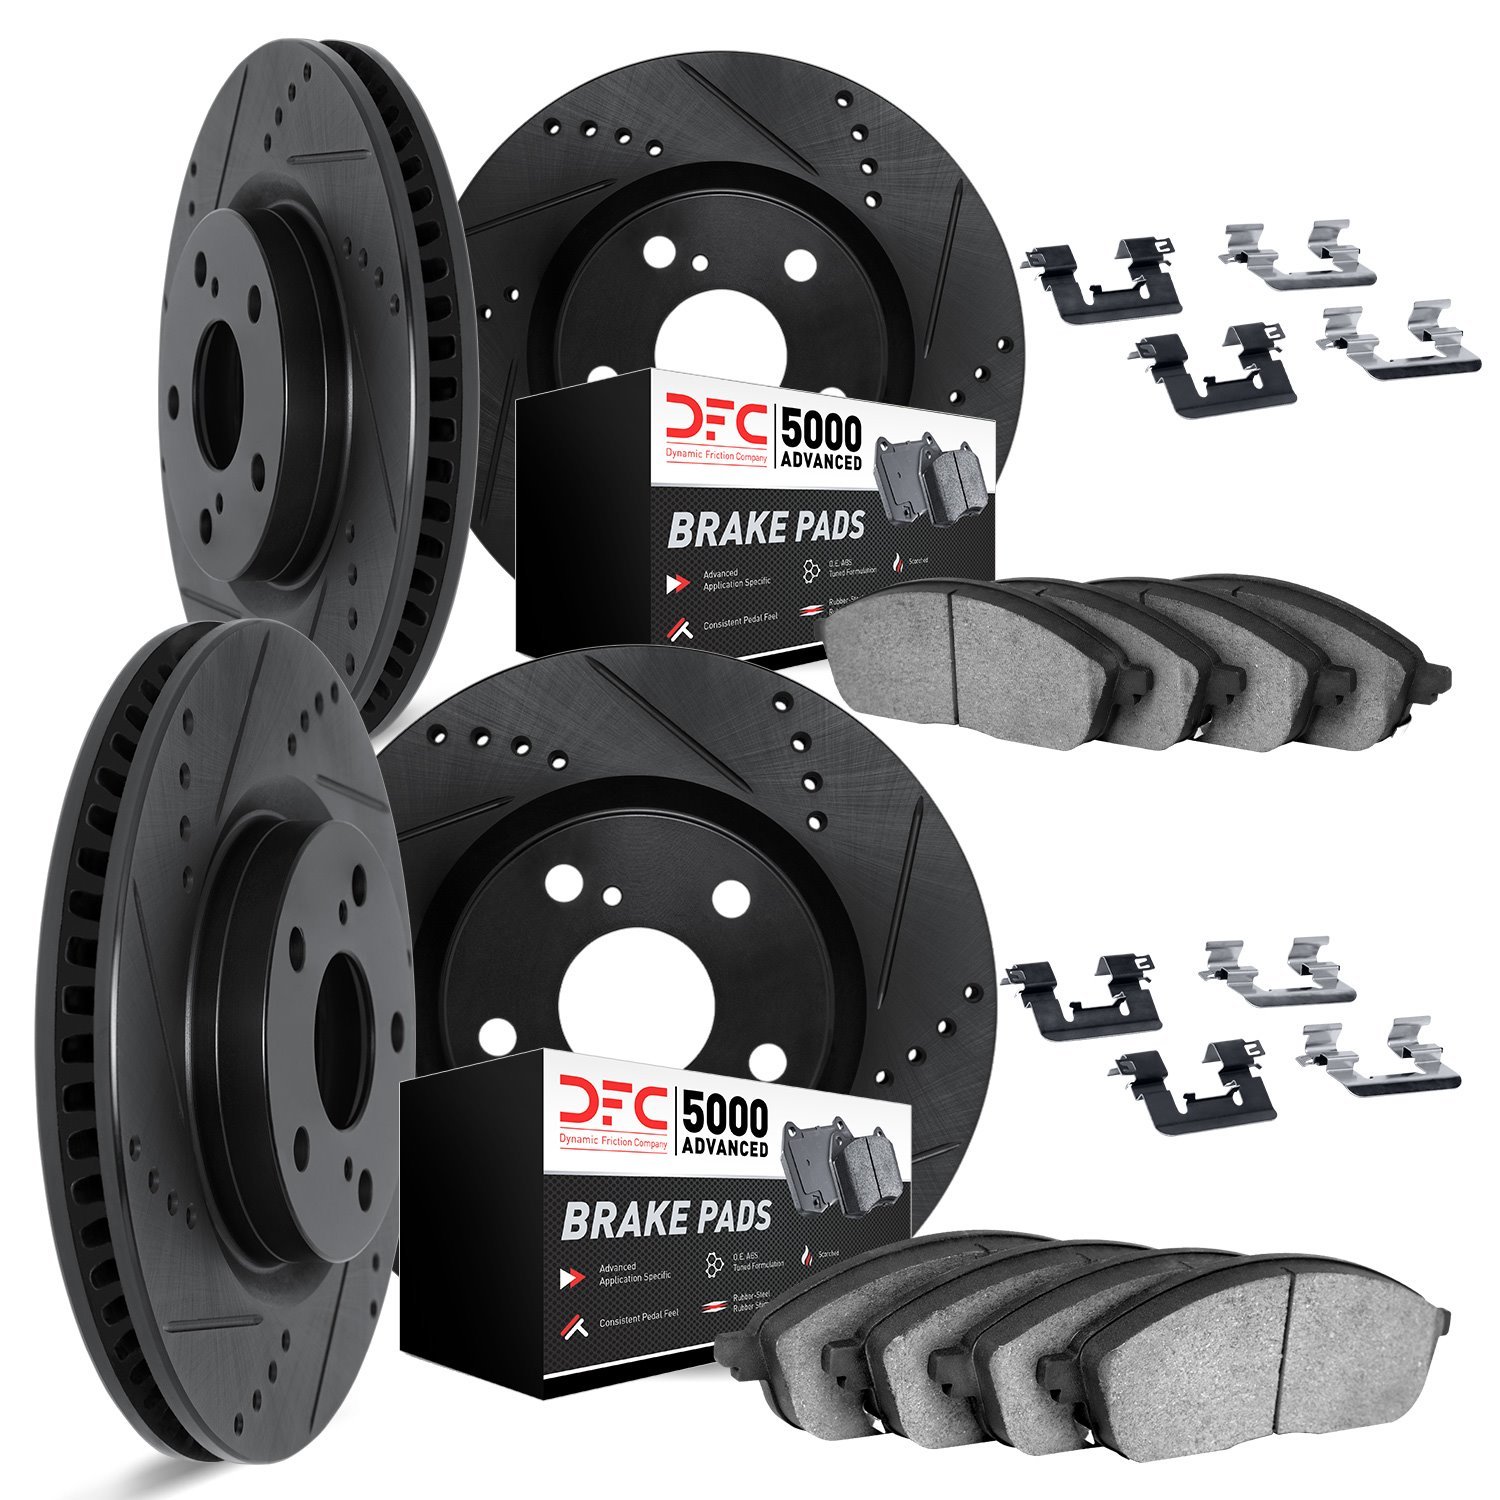 8514-42020 Drilled/Slotted Brake Rotors w/5000 Advanced Brake Pads Kit & Hardware [Black], 2013-2021 Mopar, Position: Front and